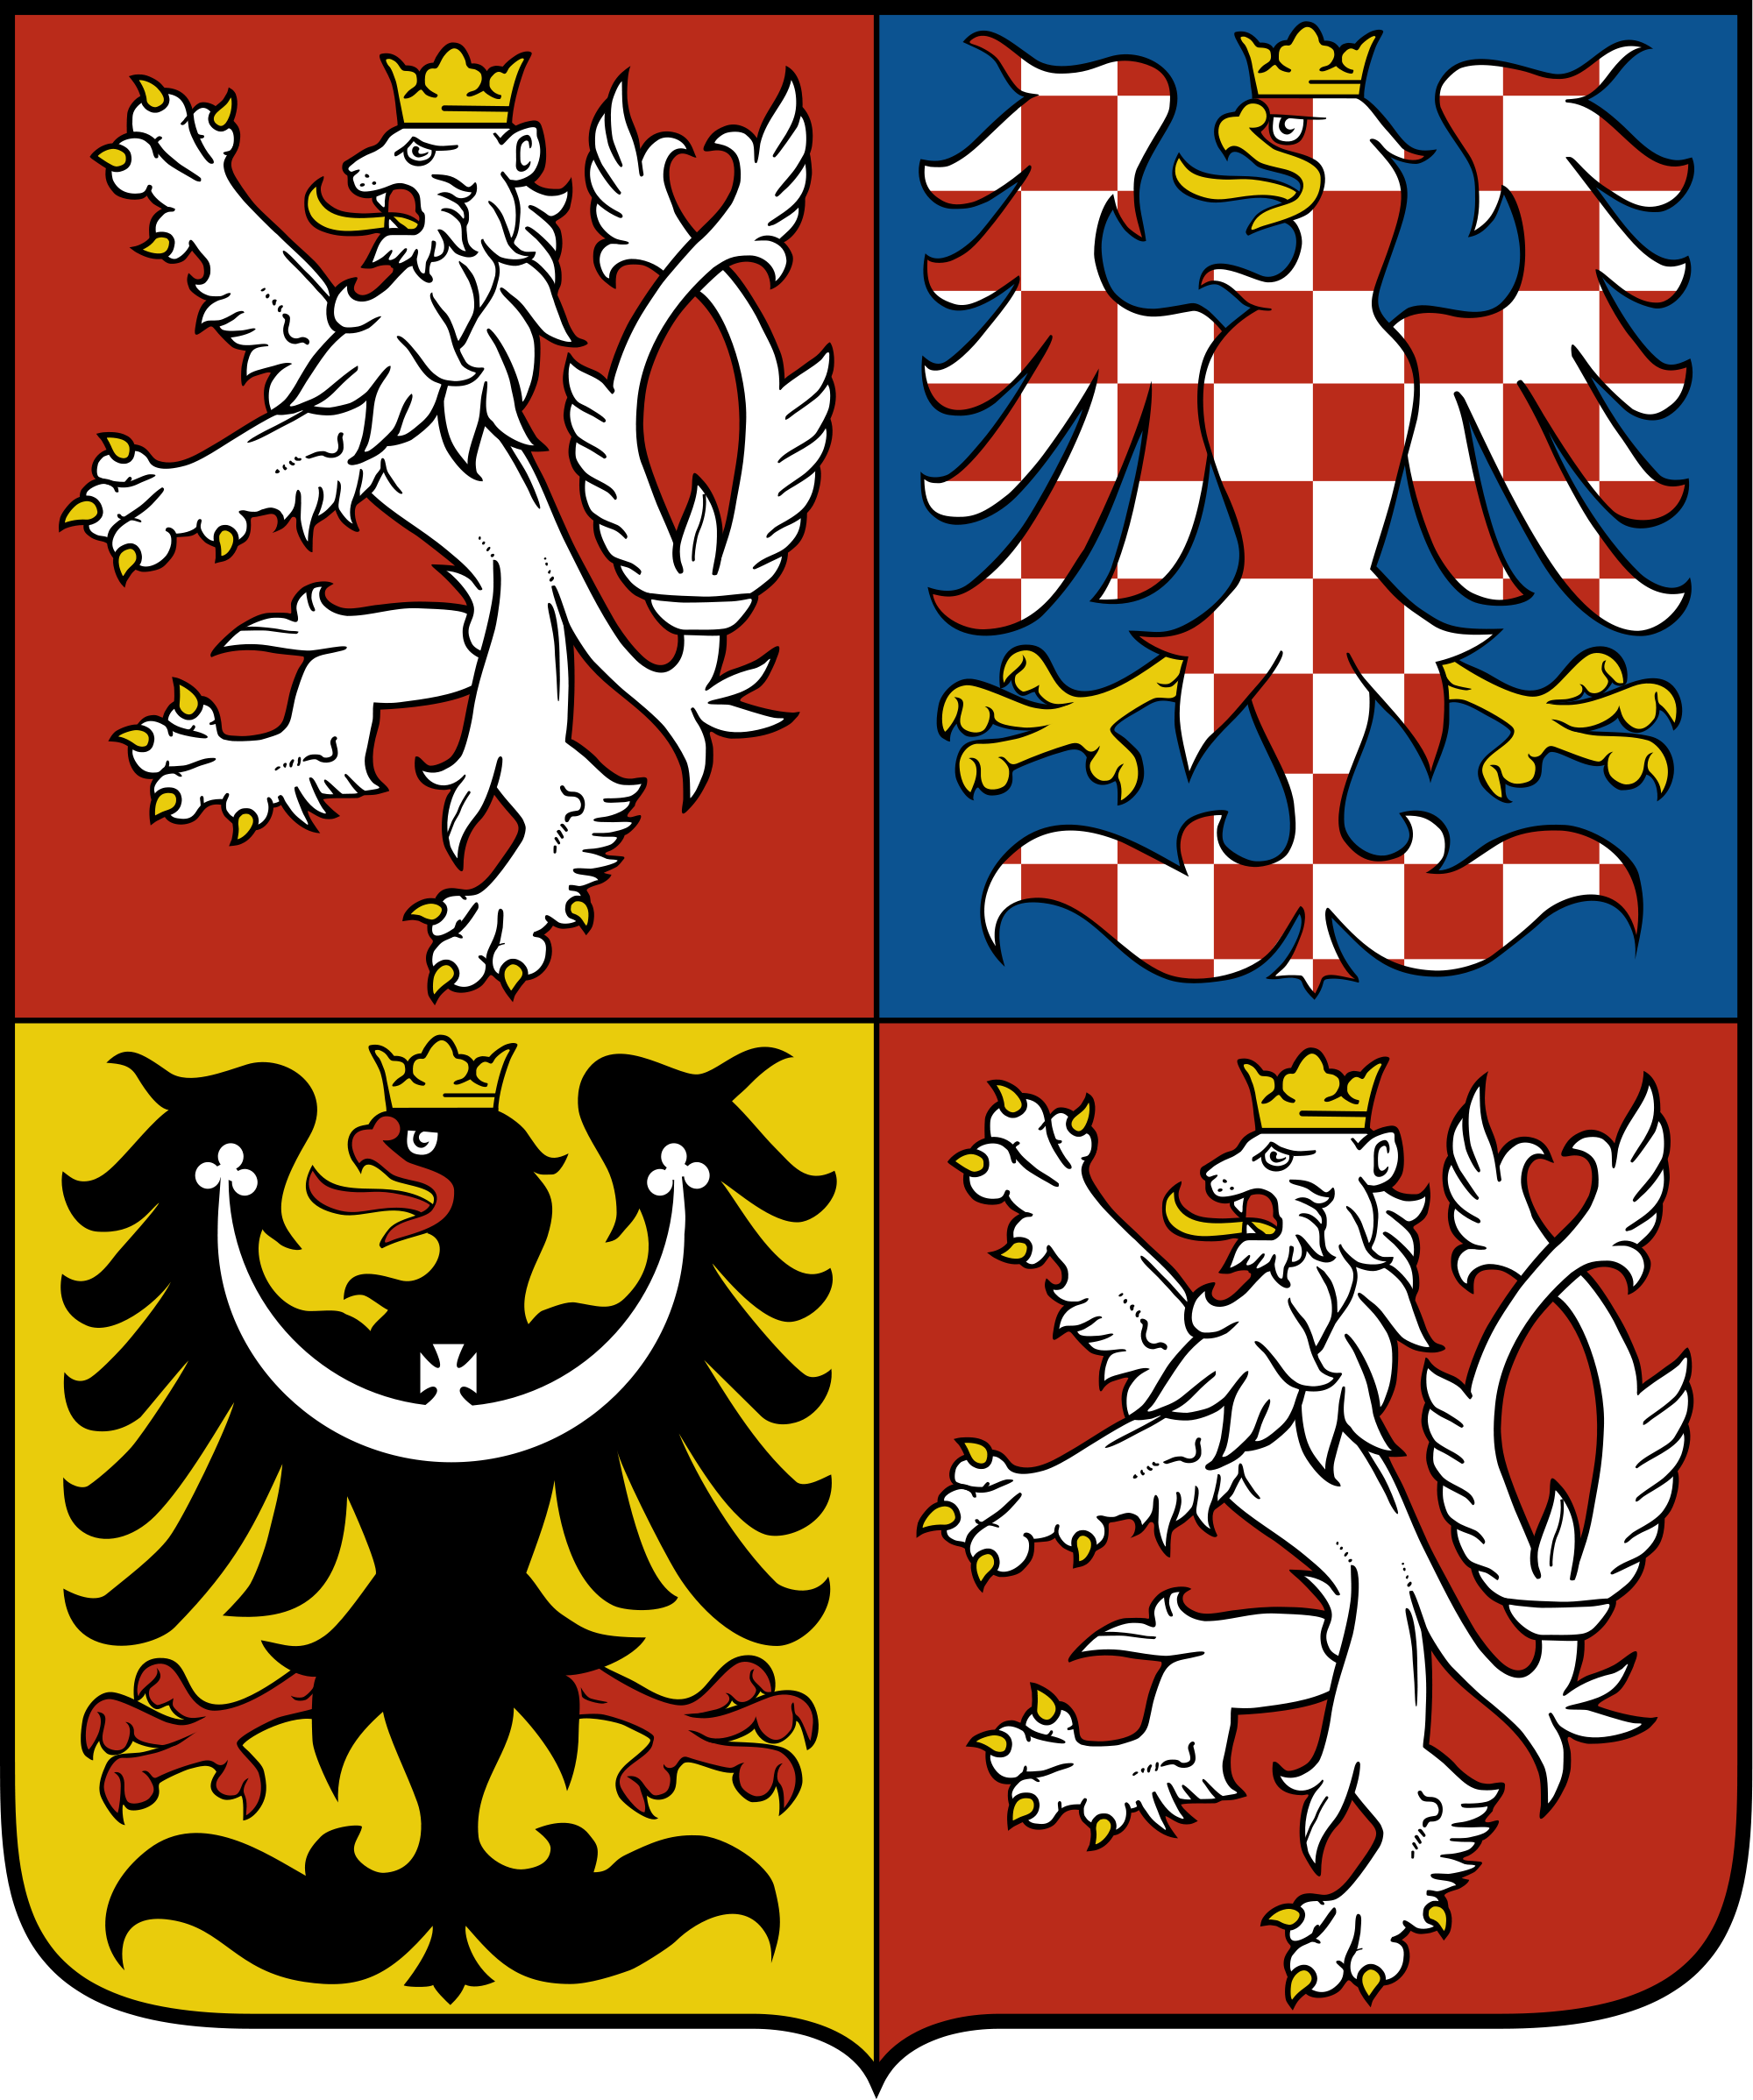 Emblem of Czech Republic